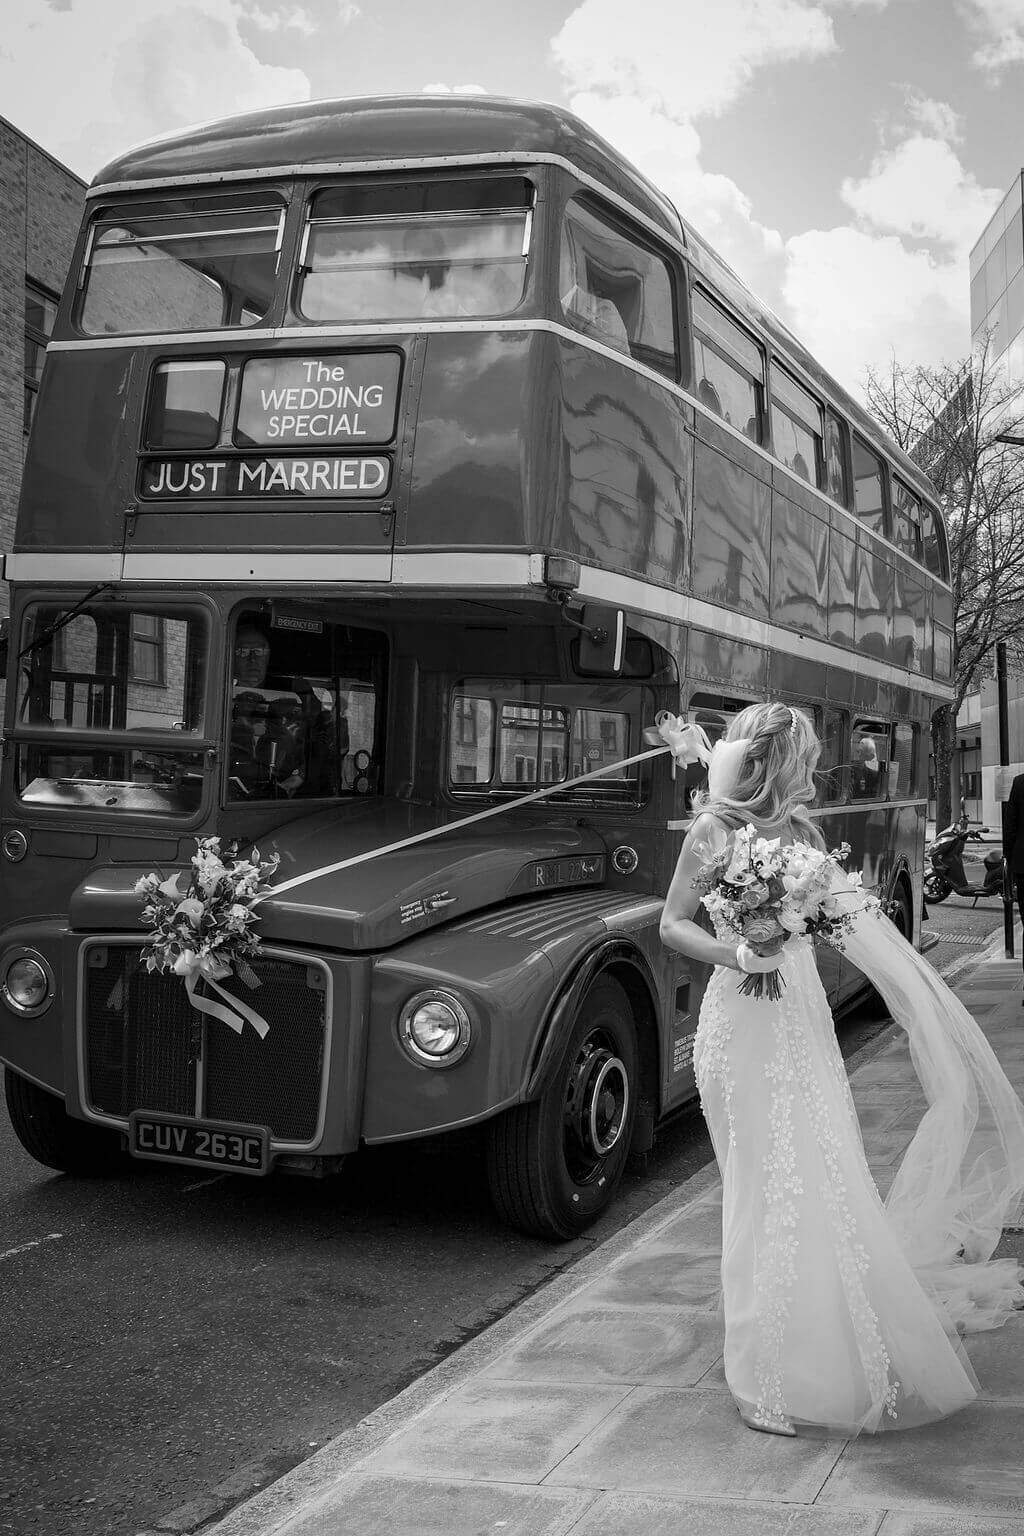 Brides veil blows in wind by Lonodon routemaster bus